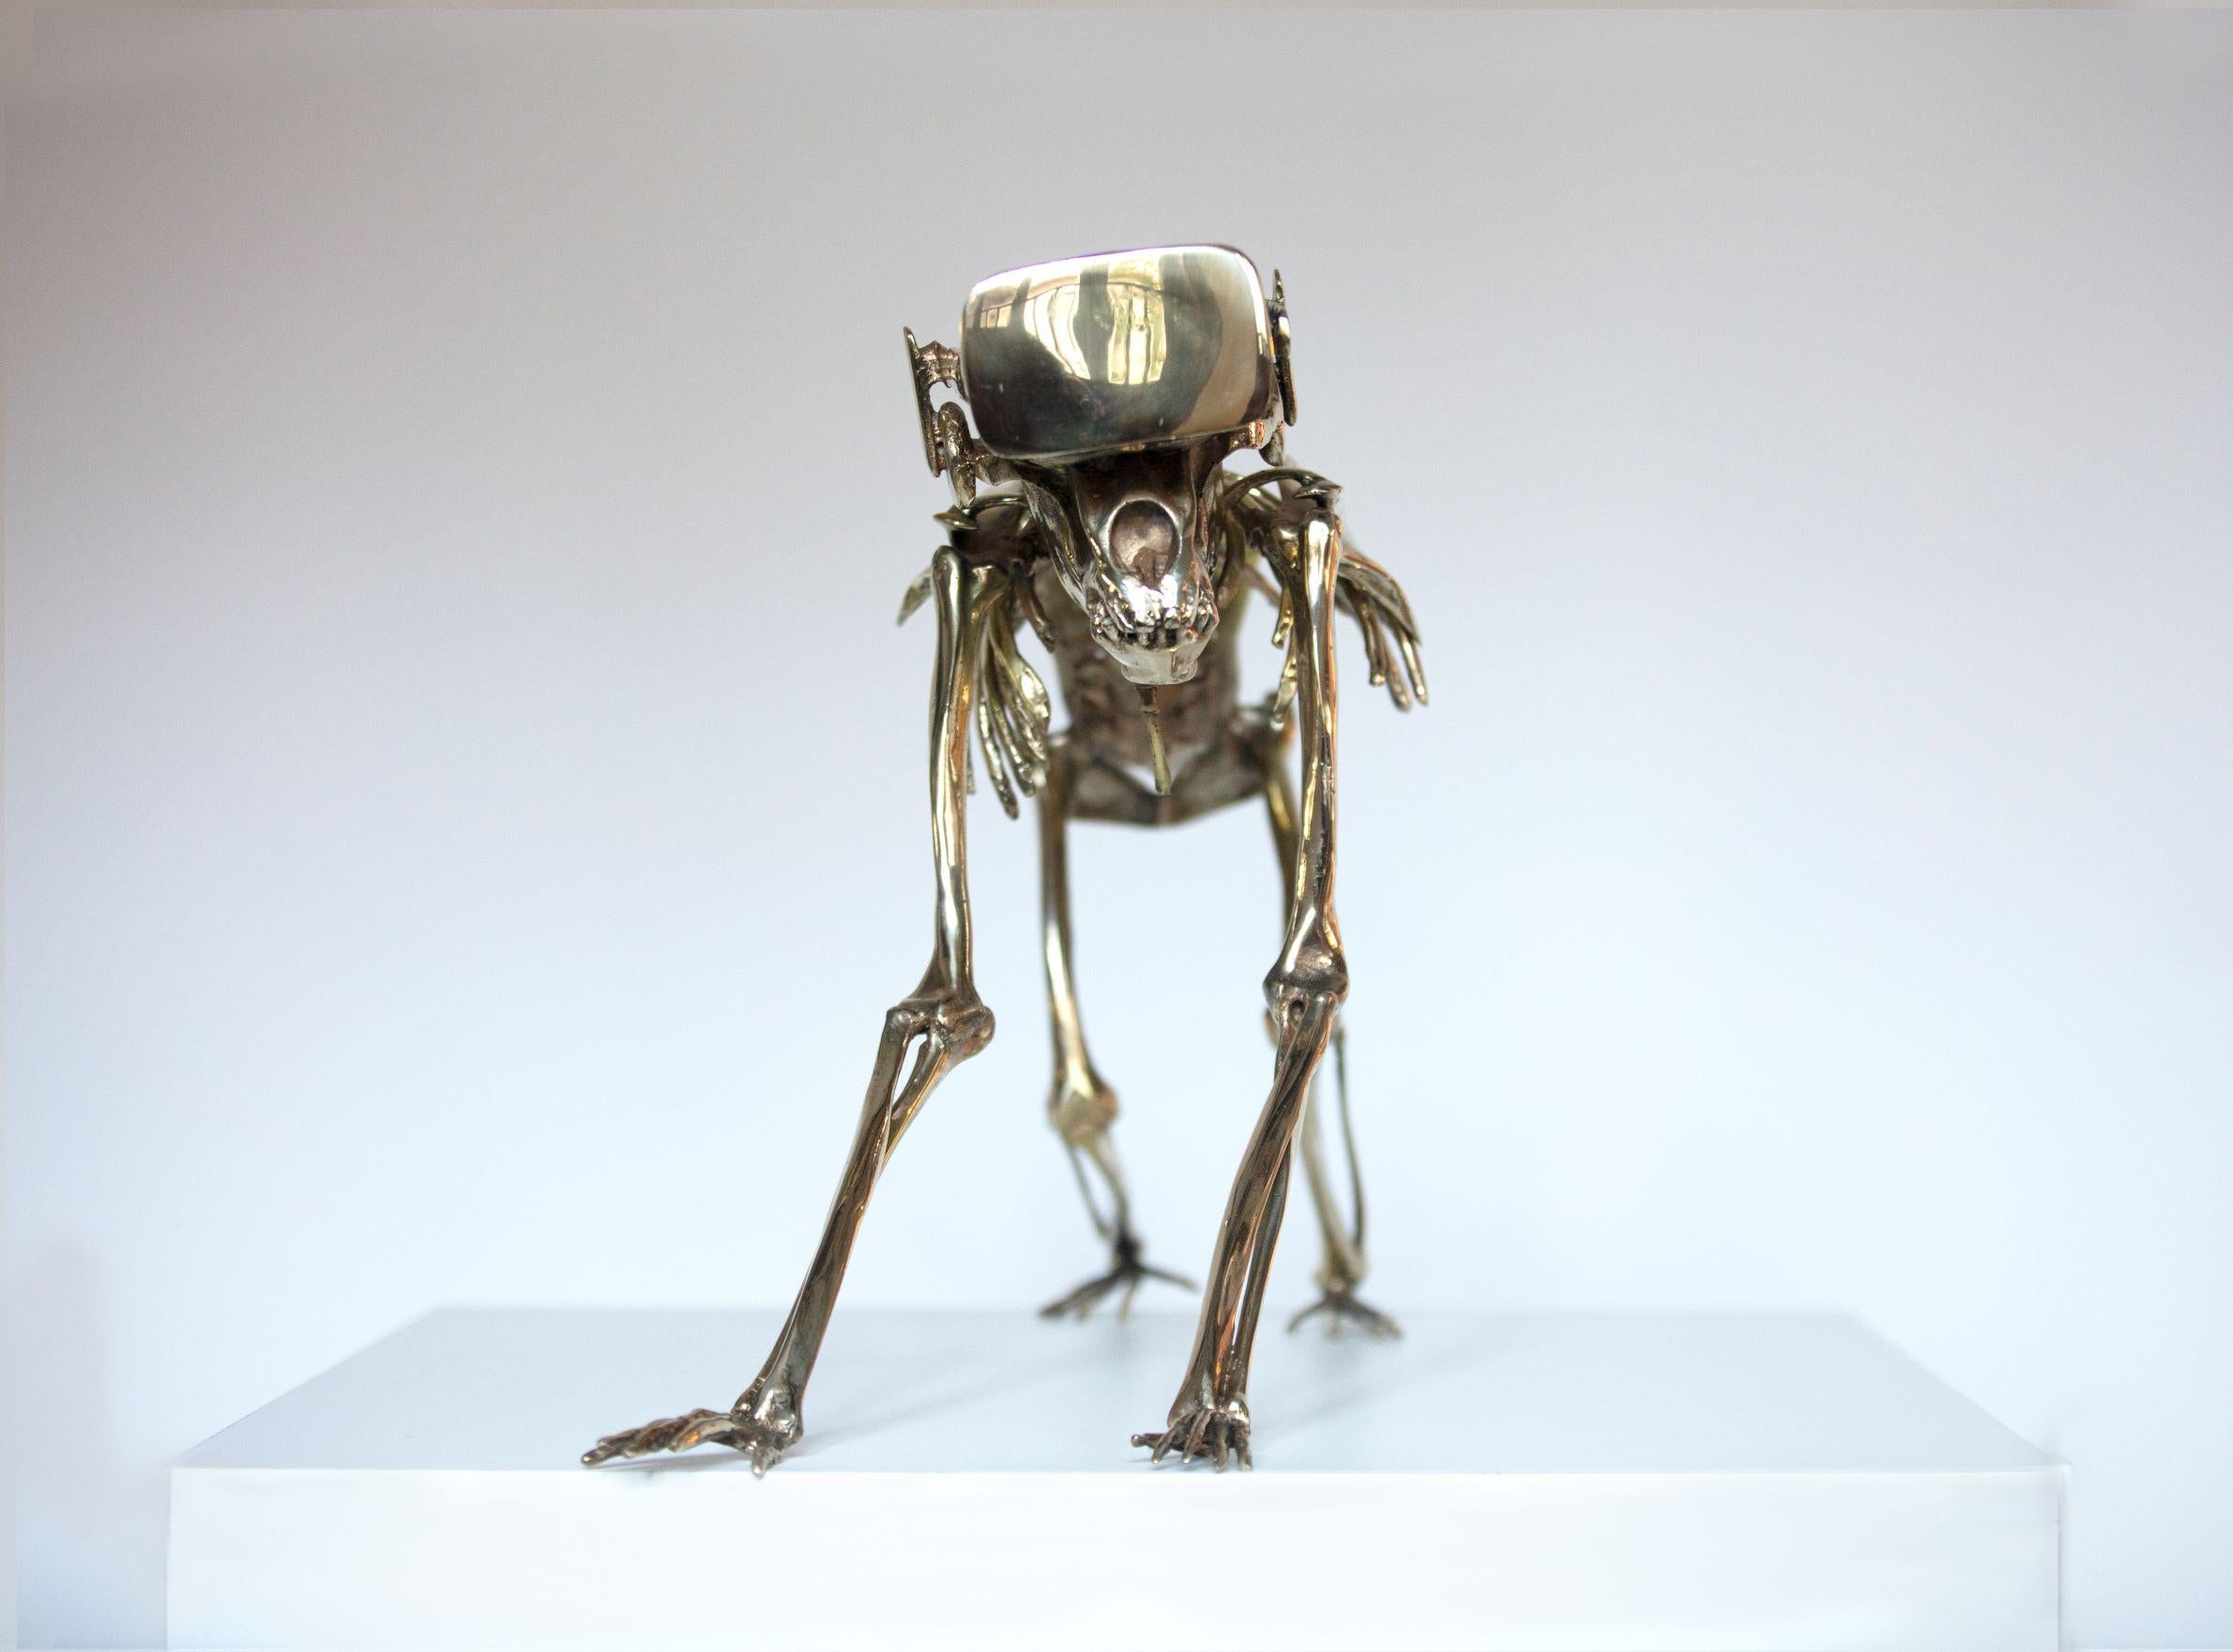 Beto Gatti Figurative Sculpture - Sapiens 2.0 - bronze sculpture, 2021